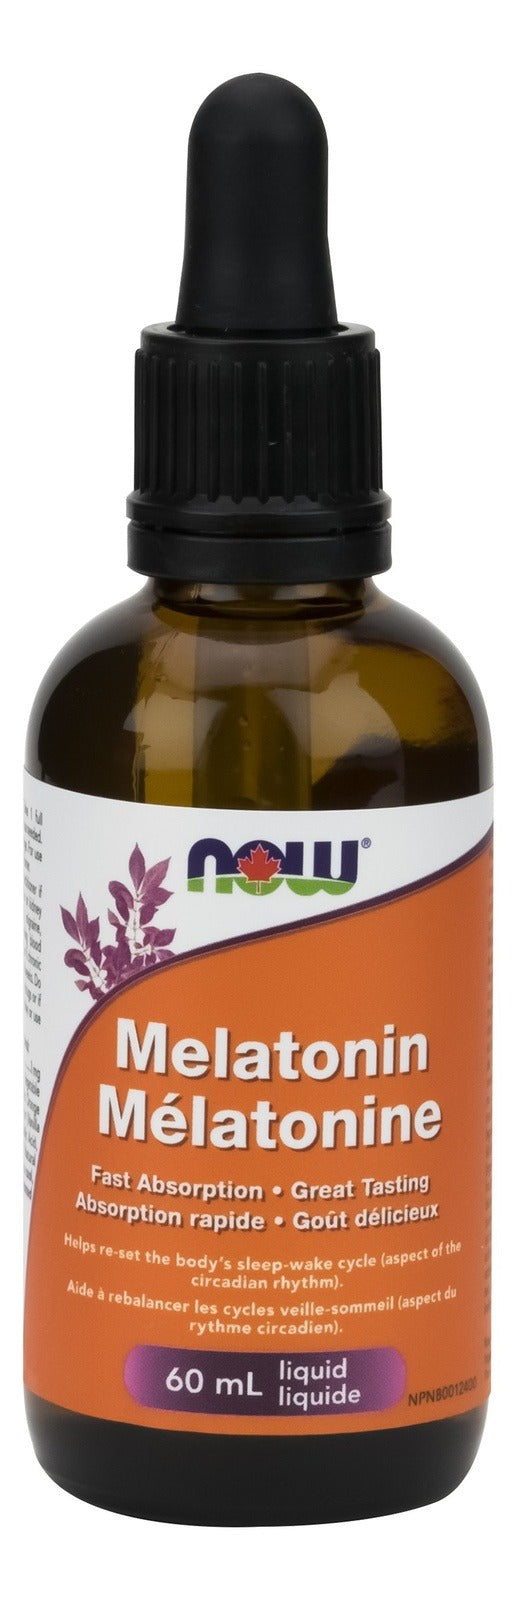 NOW Melatonin Liquid 60 mL Image 1